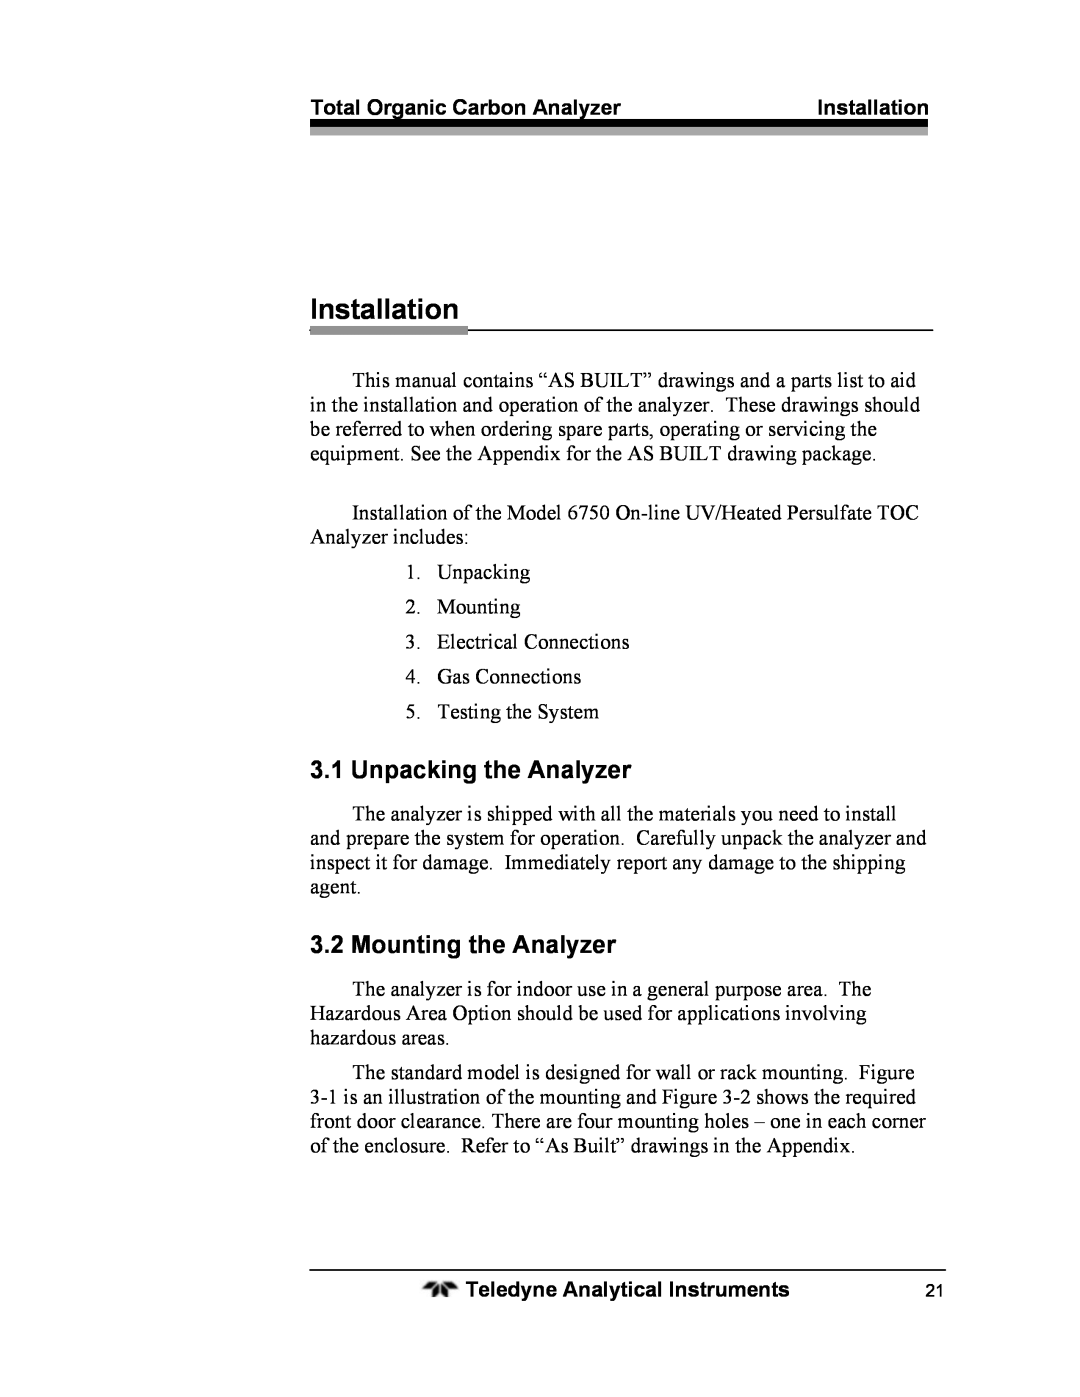 Teledyne 6750 operating instructions Installation, 3.1Unpacking the Analyzer, Mounting the Analyzer 